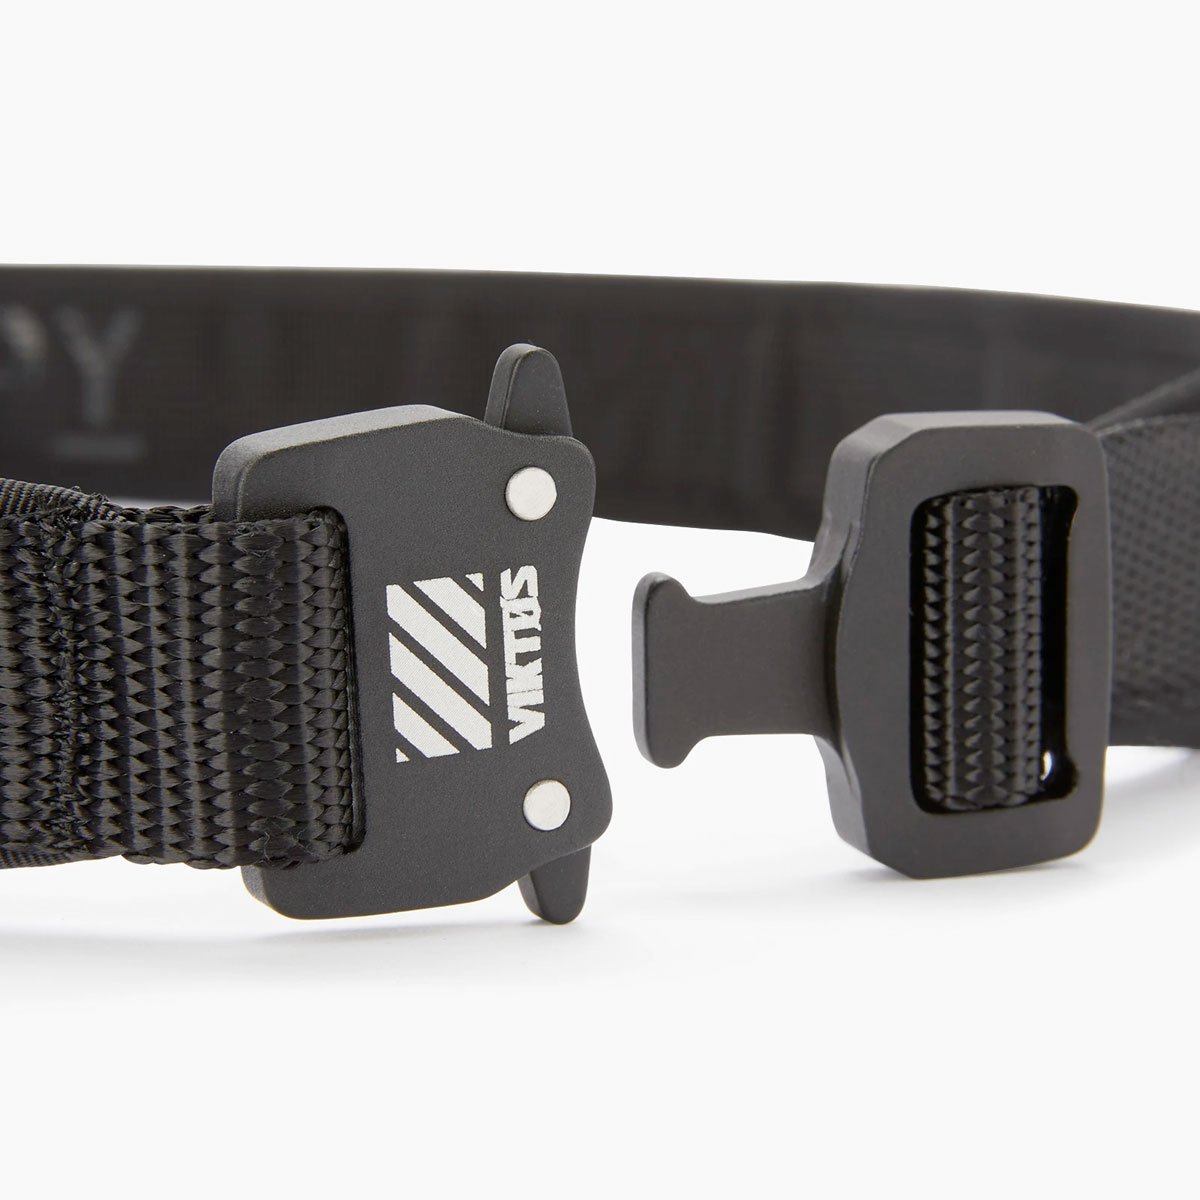 VIKTOS Daily Gunfight Belt Nightfjall Accessories VIKTOS Tactical Gear Supplier Tactical Distributors Australia